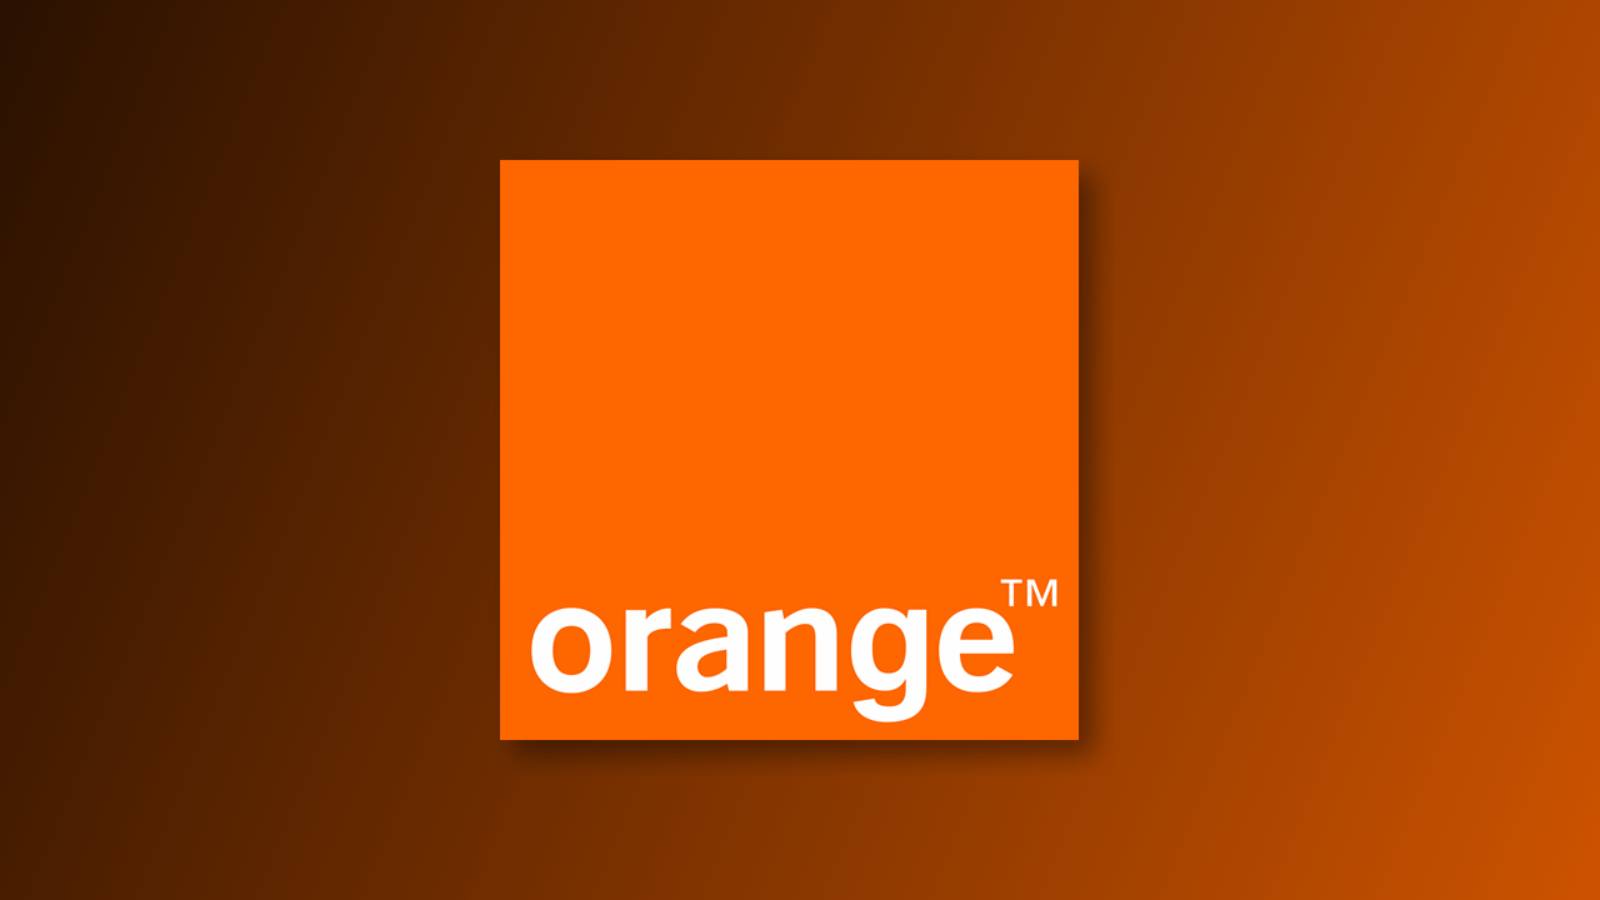 Orange Prevestit PROBLEMA MAJORA Afecteaza Clientii